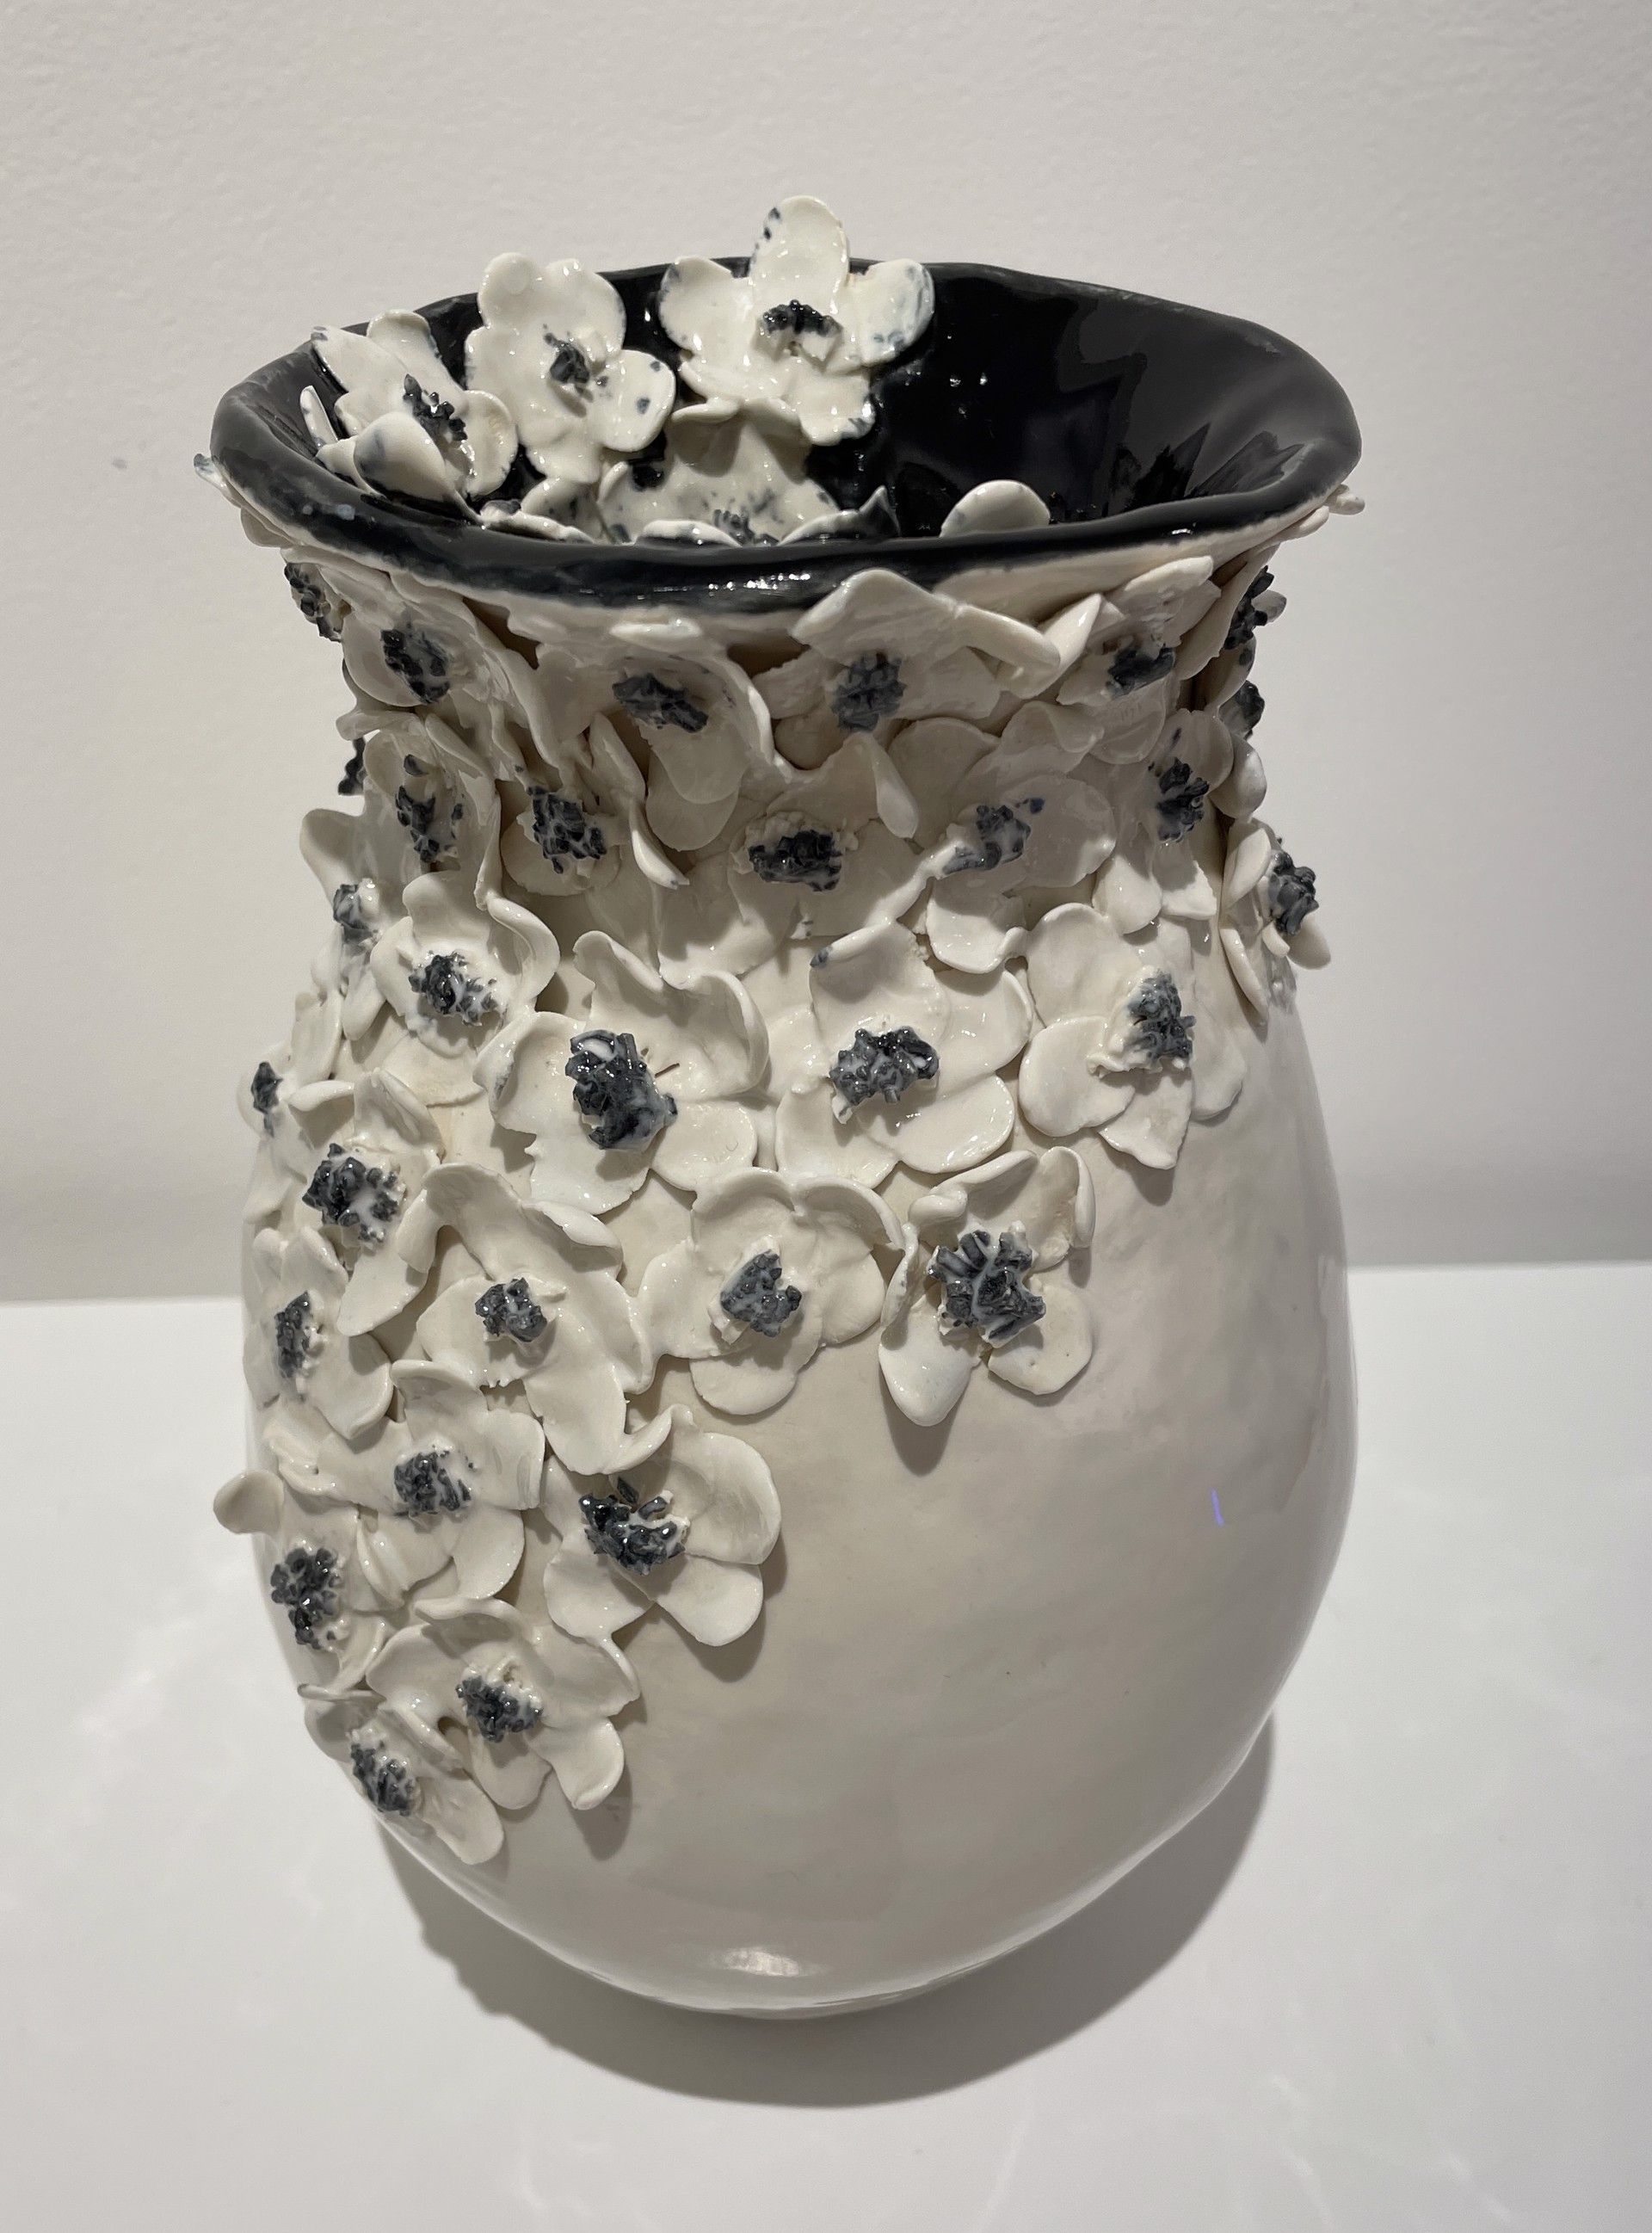 Flower Vase 3 by Jill Rothenberg-Simmons